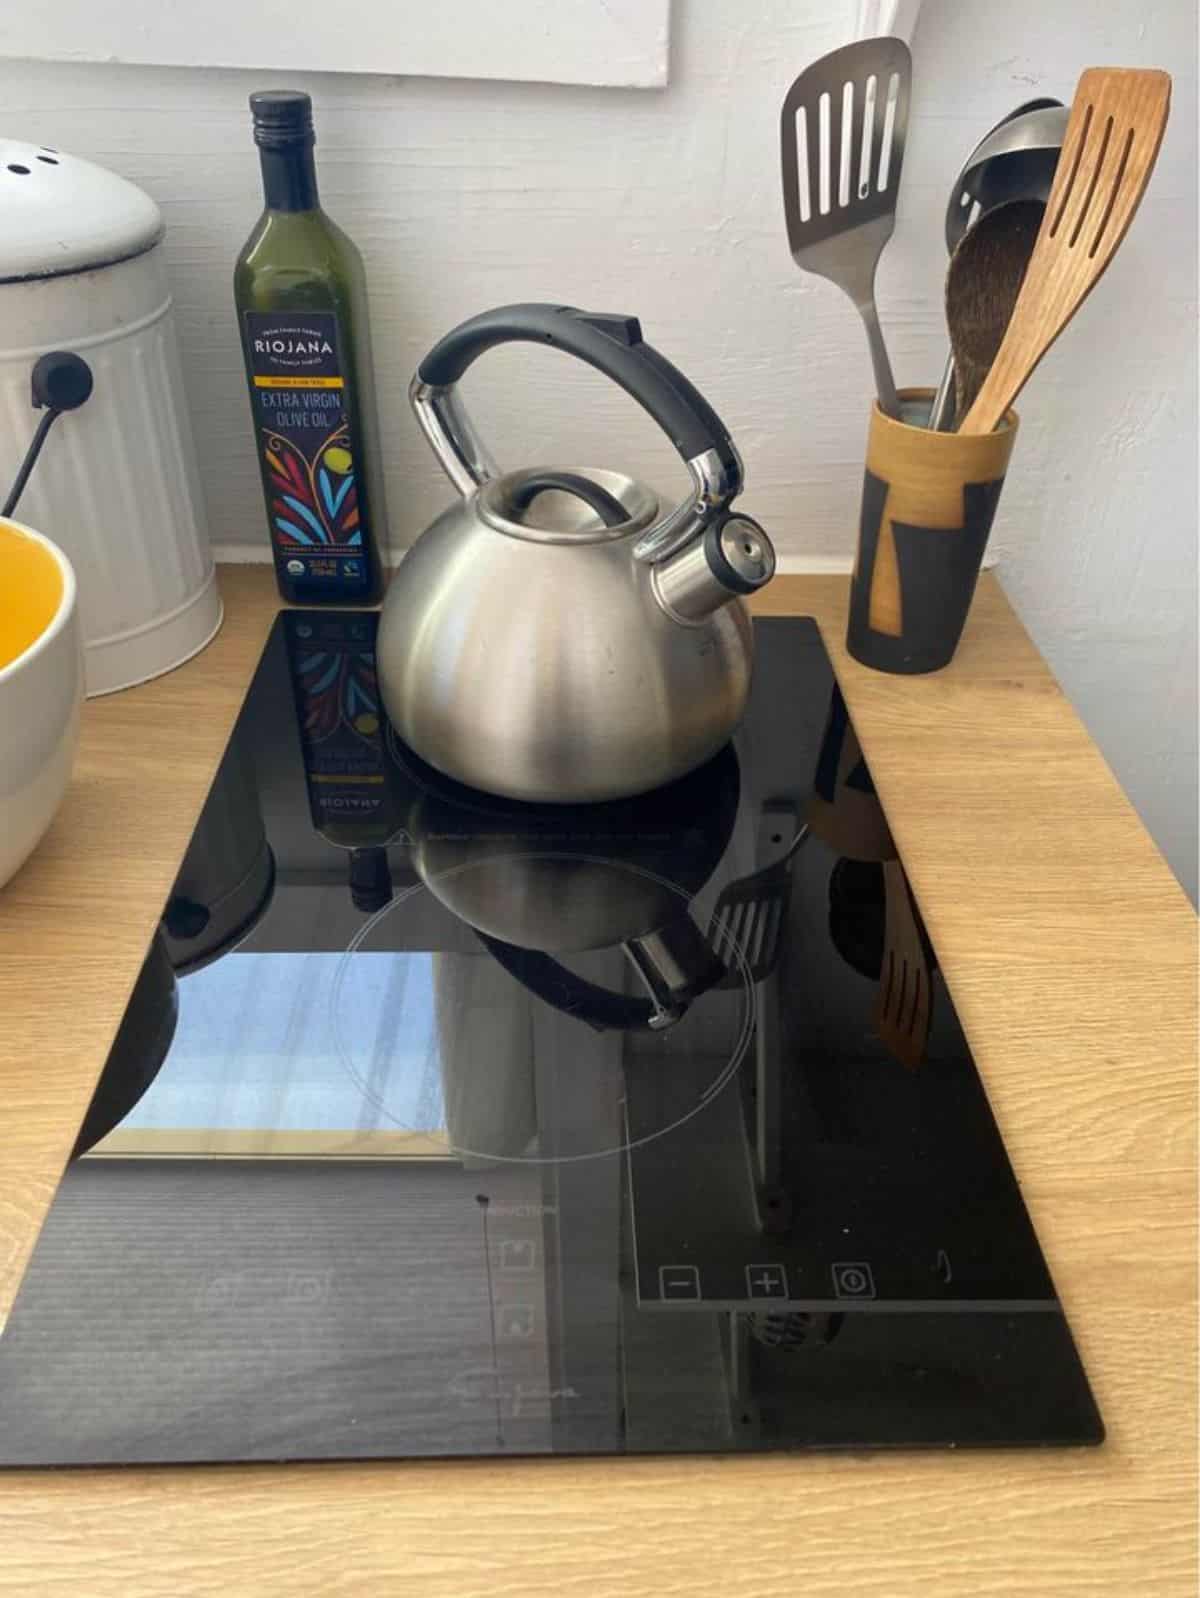 essential appliances present in the kitchen